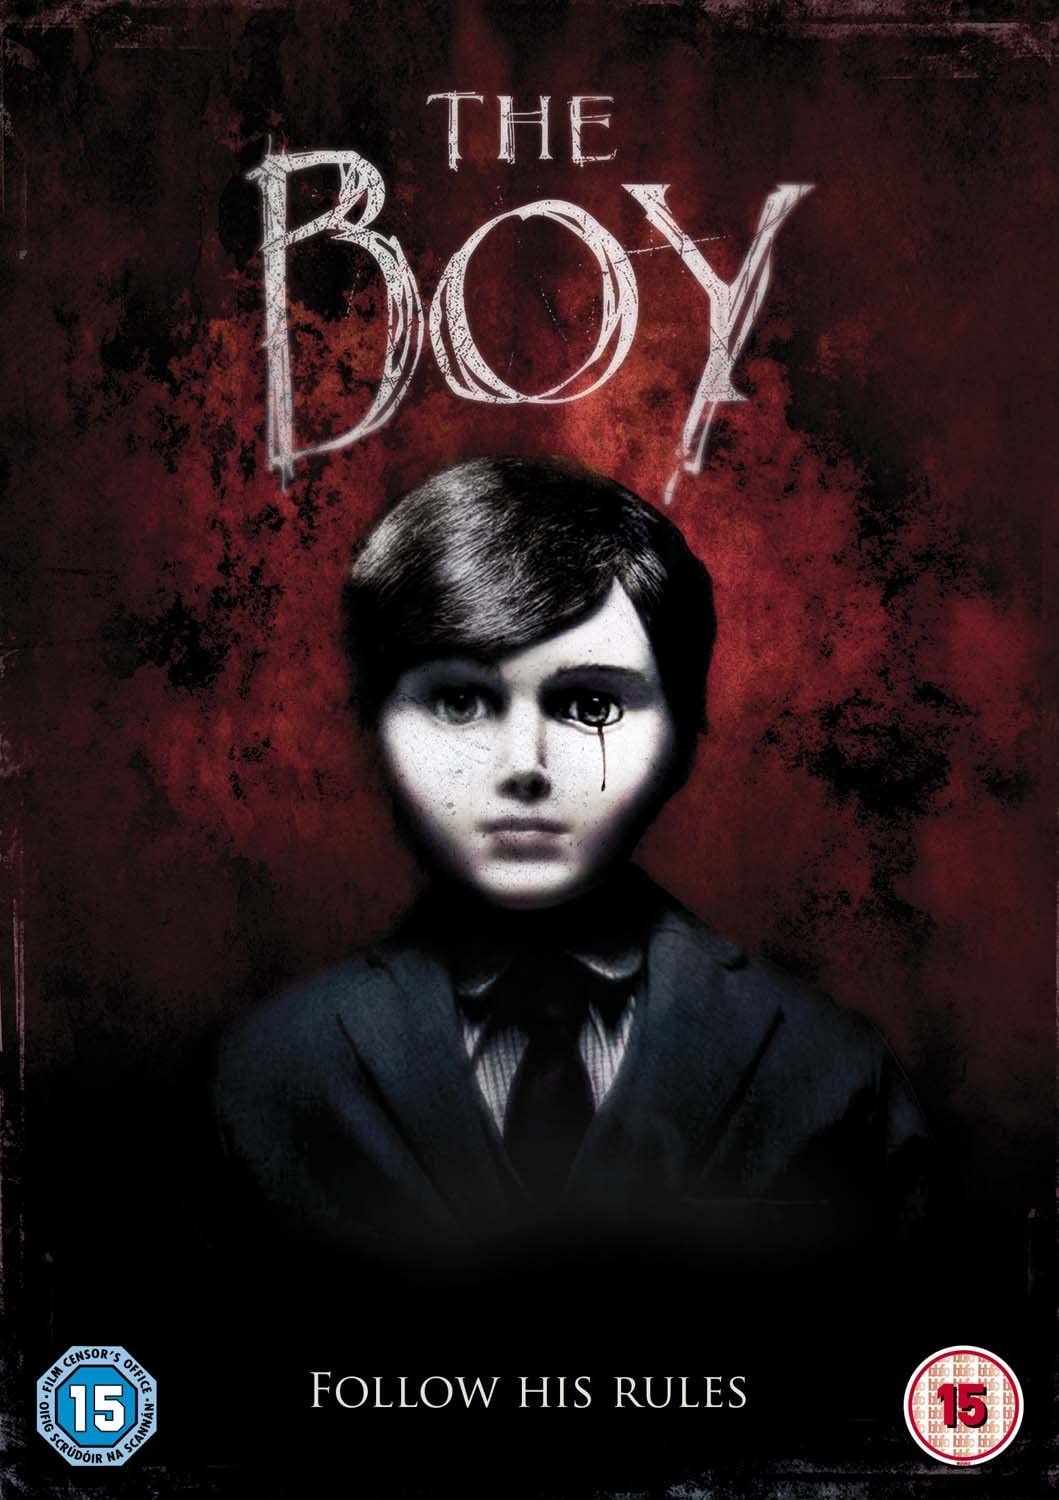 The Boy - Horror/Thriller [DVD]